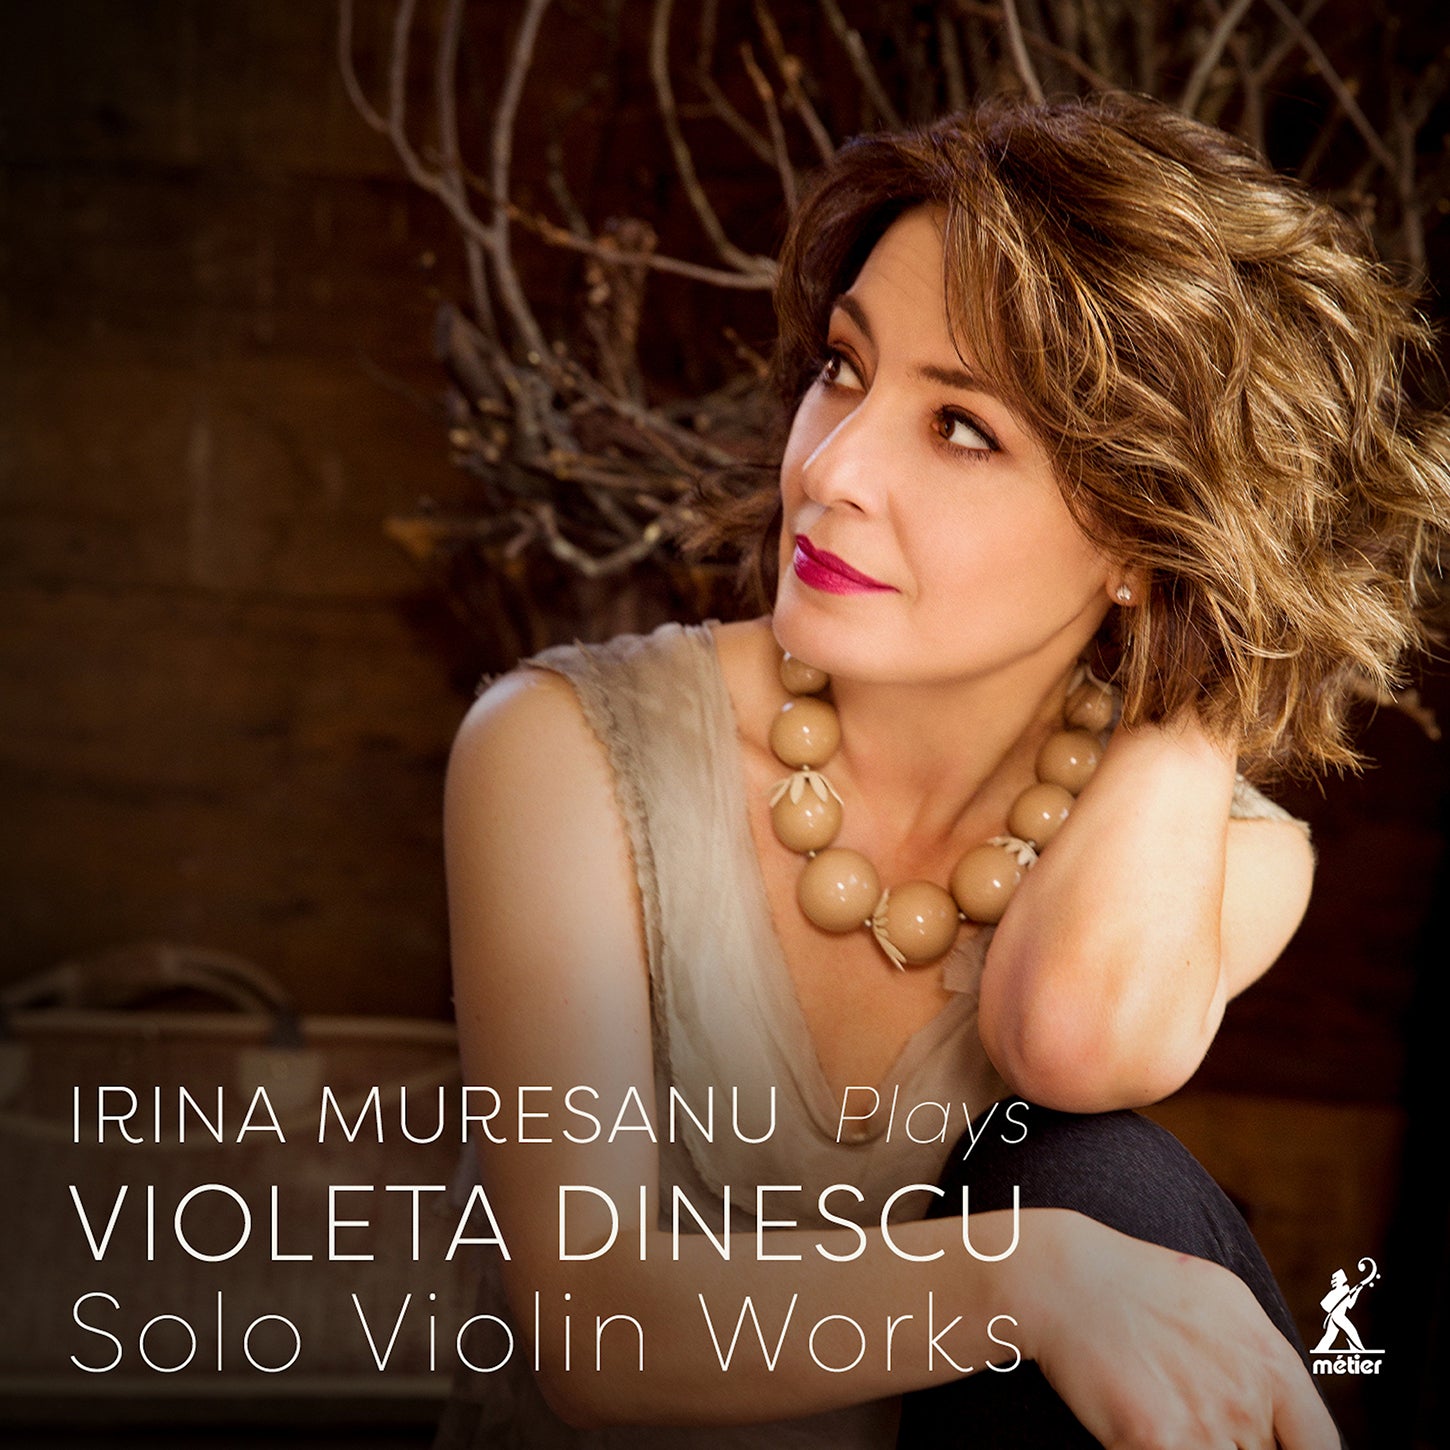 Dinescu: Solo Violin Works / Muresanu